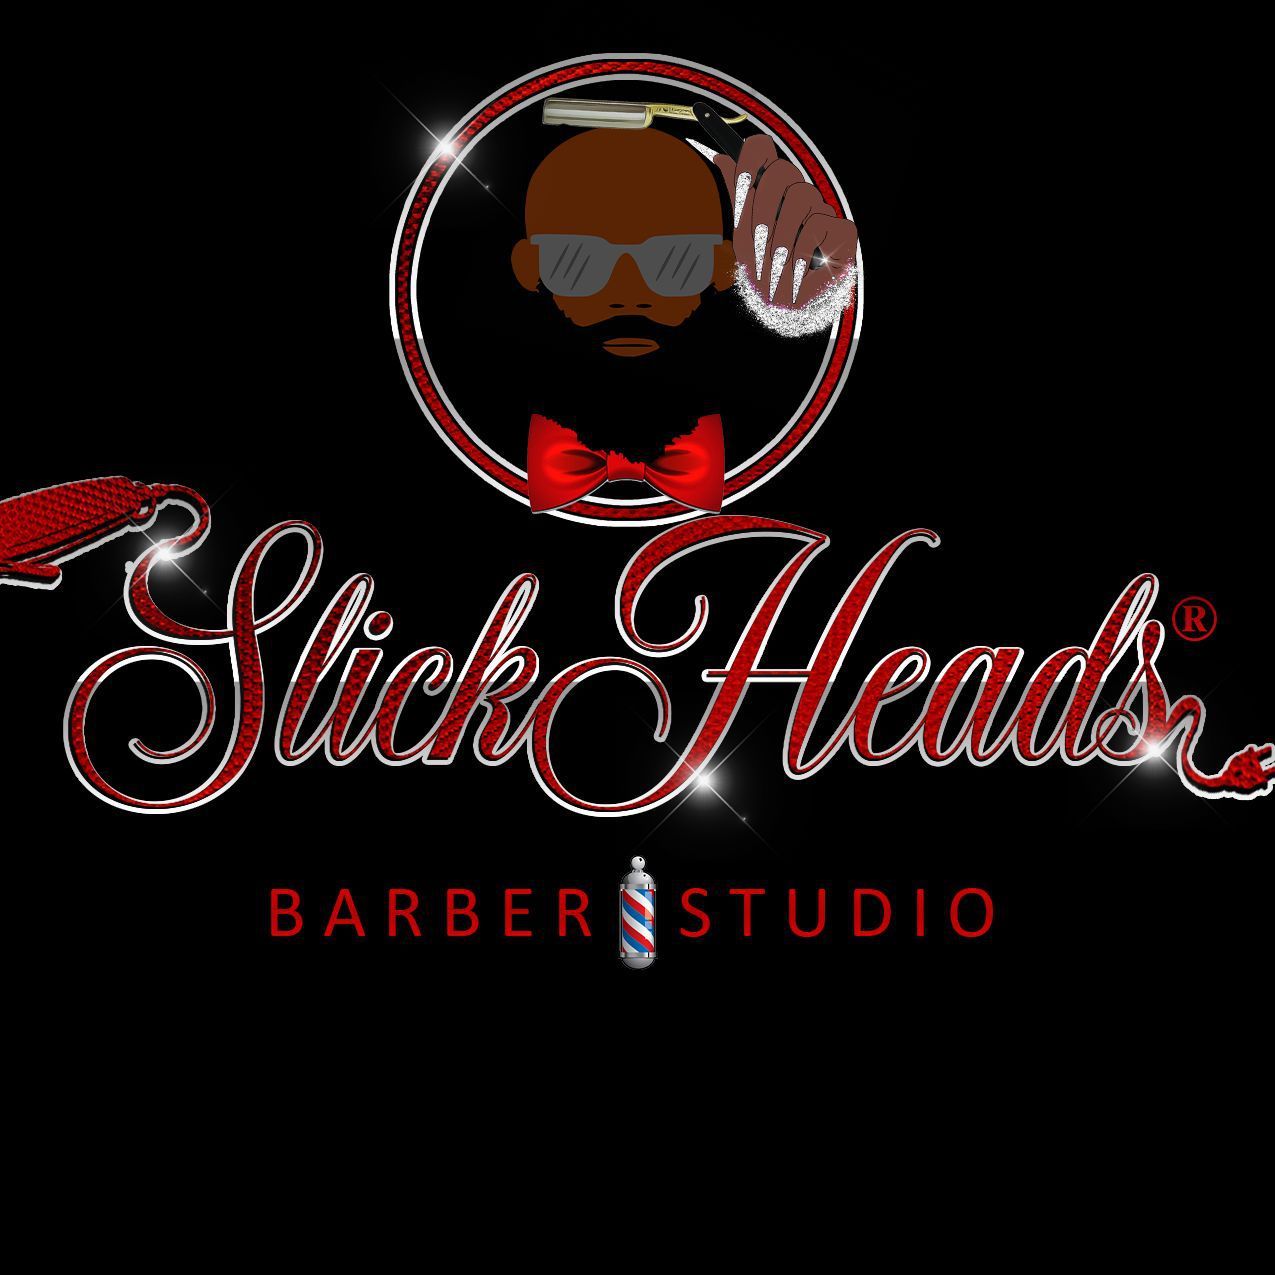 SlickHeads Barber Studio, LLC, 5100 W. Sublett Rd. Suite 609 Arlington, TX, Suite 609, Arlington, 76001